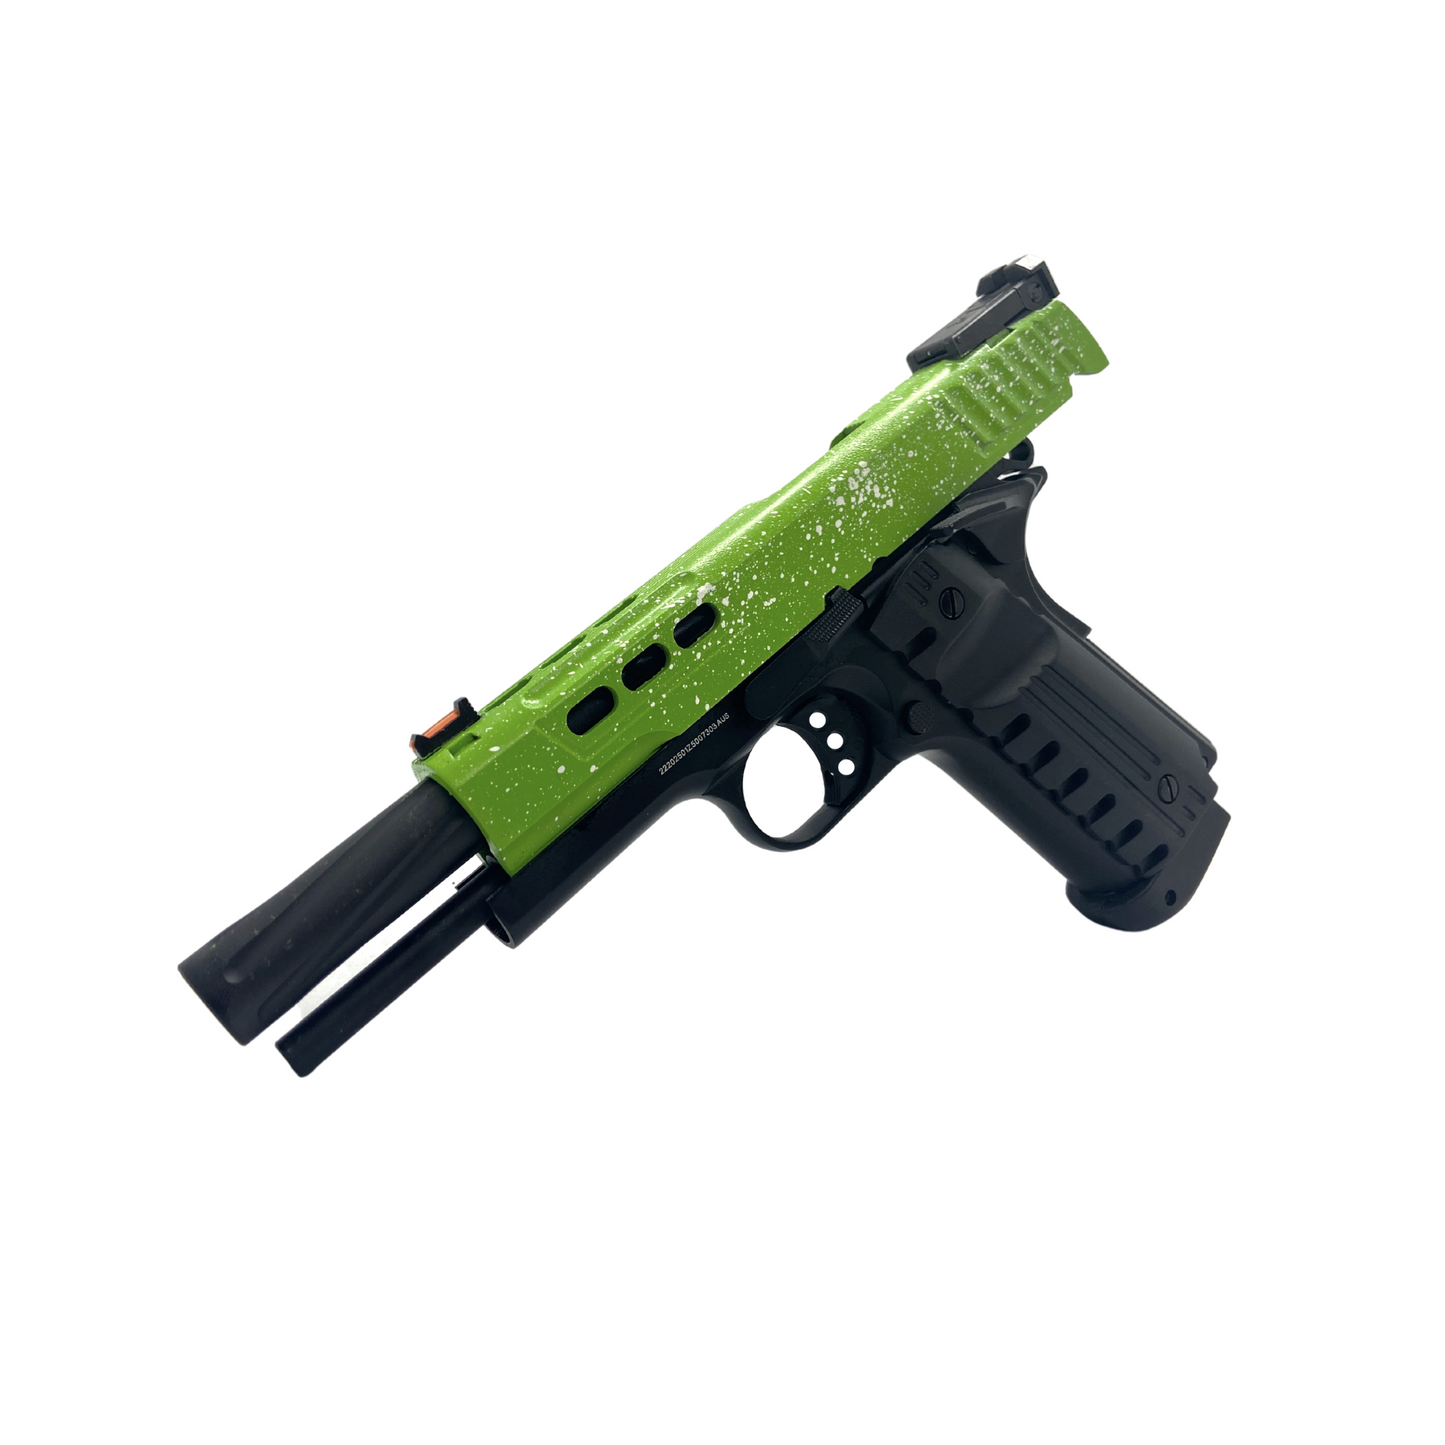 All Green G/E 3368 Hi-Capa 5.1 Gas Pistol - Gel Blaster